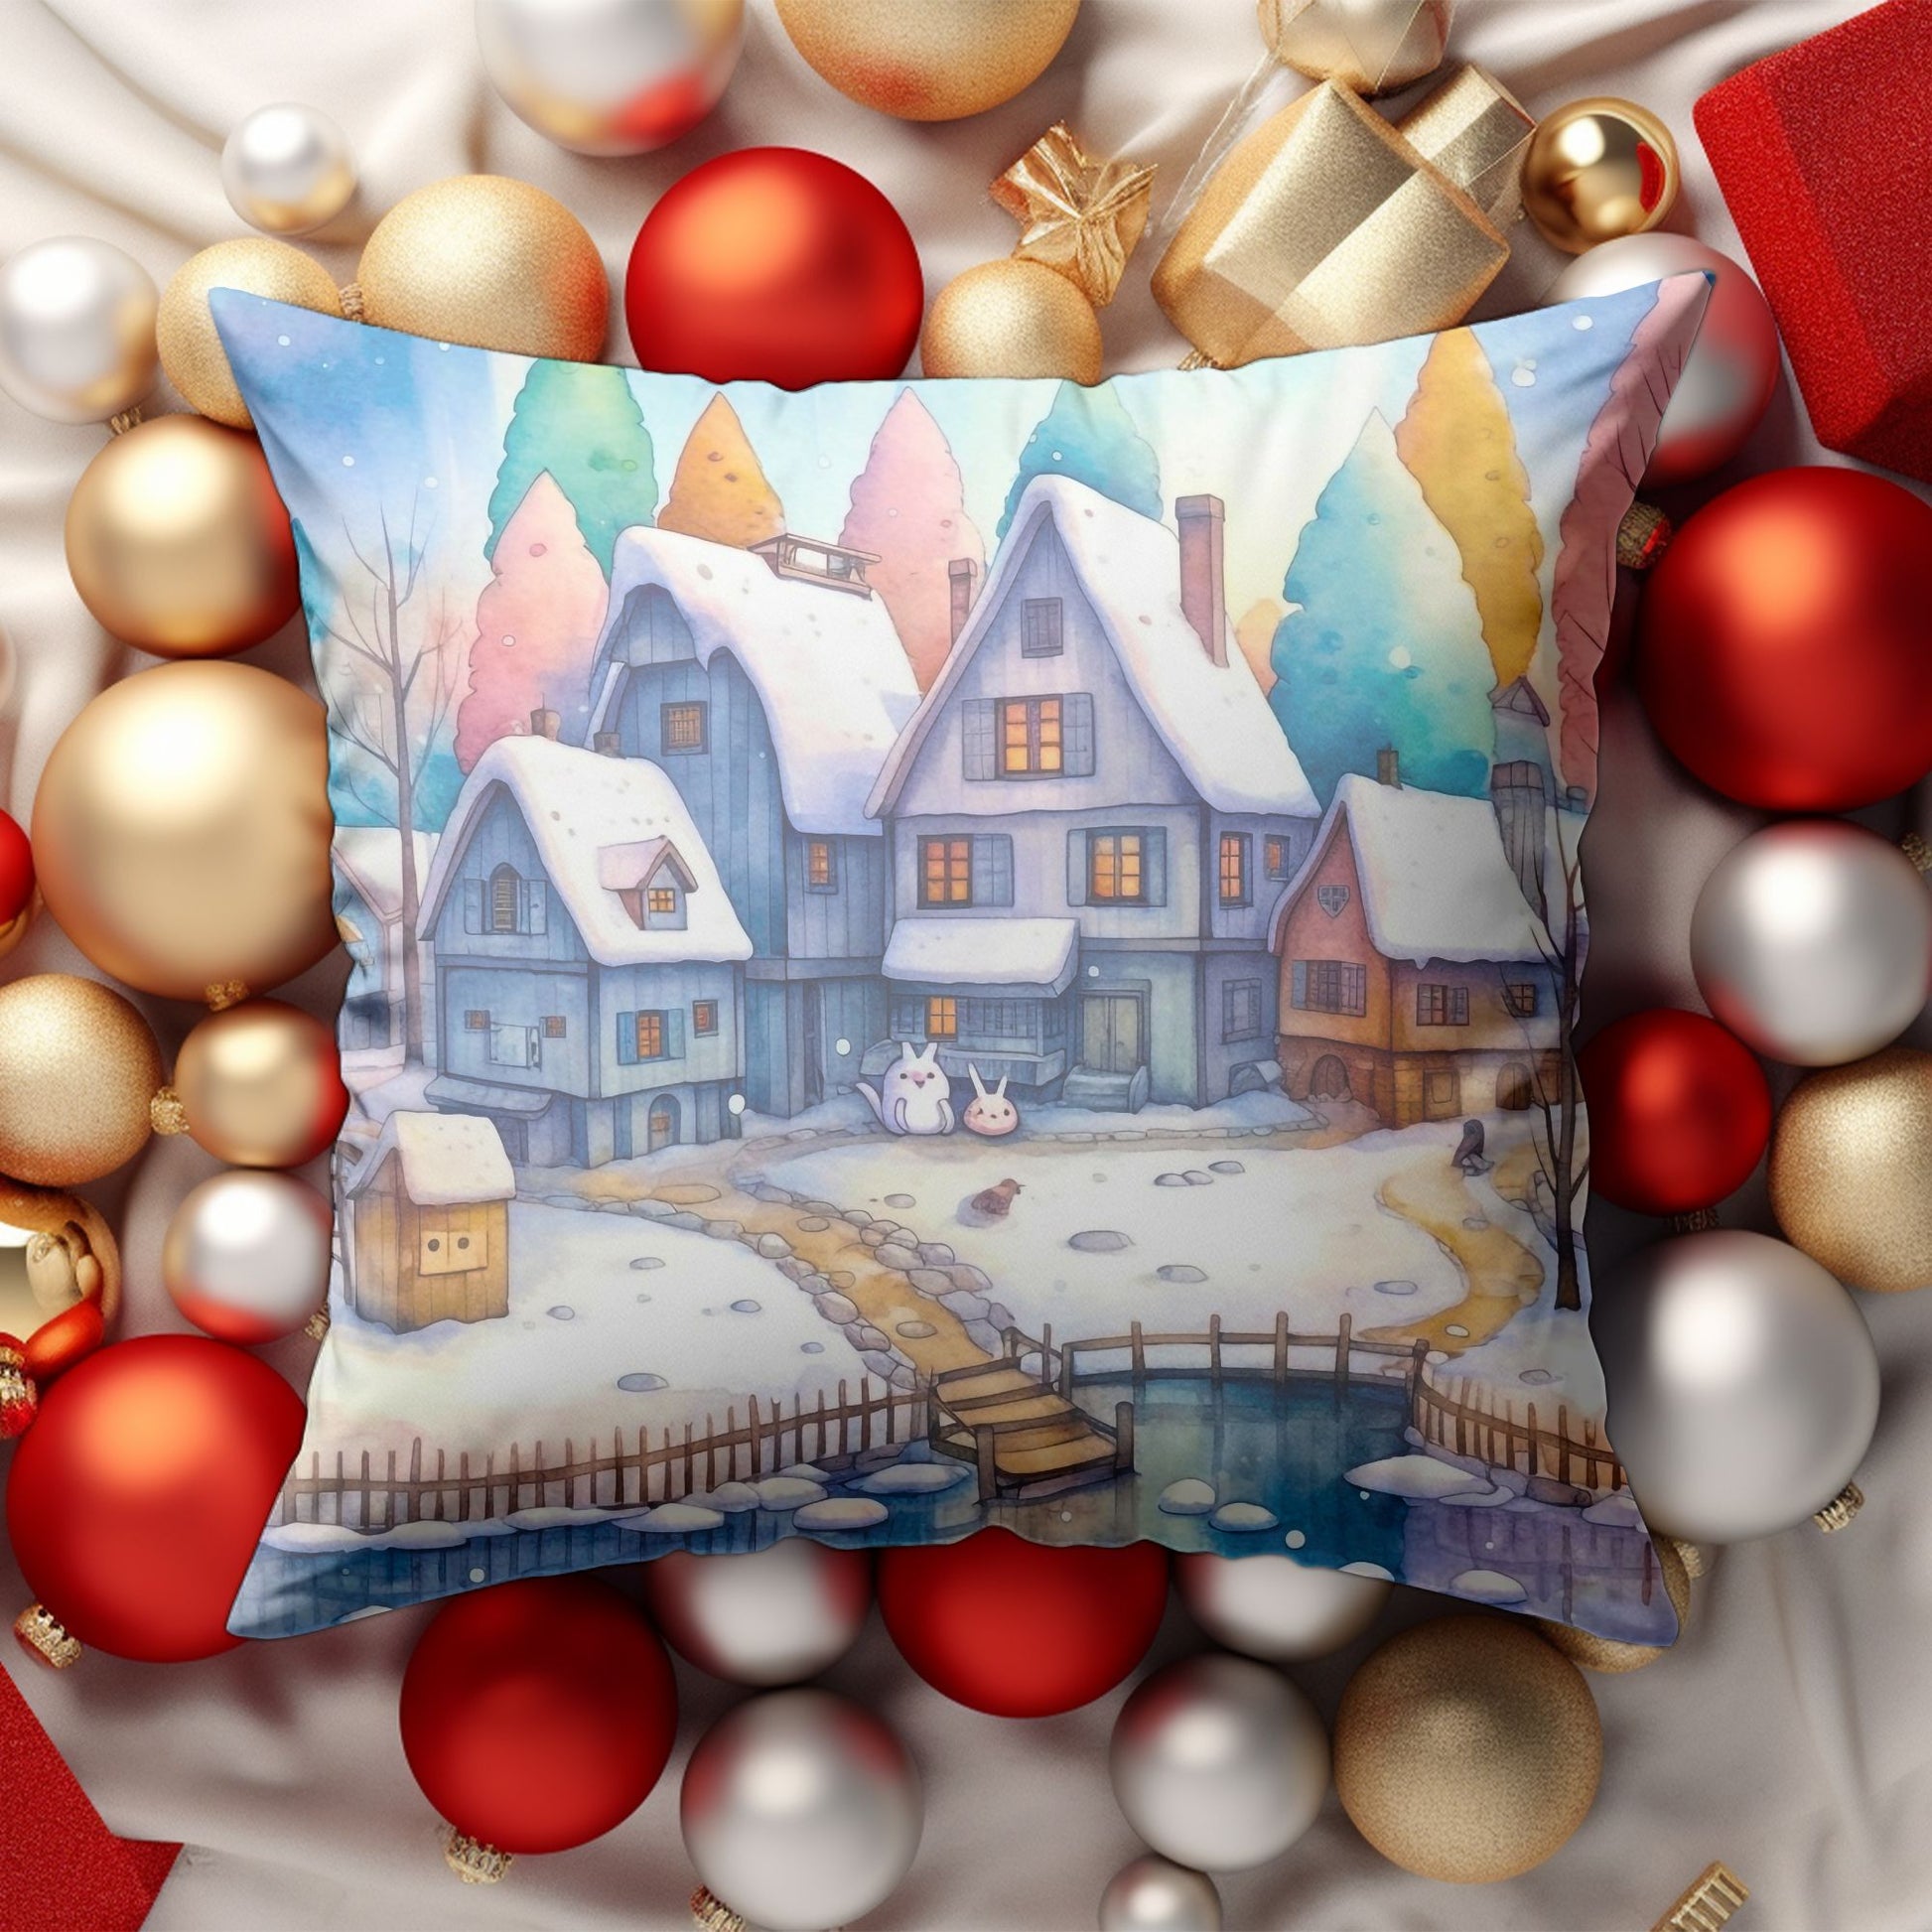 Whimsical Christmas Village Illustration in Decor